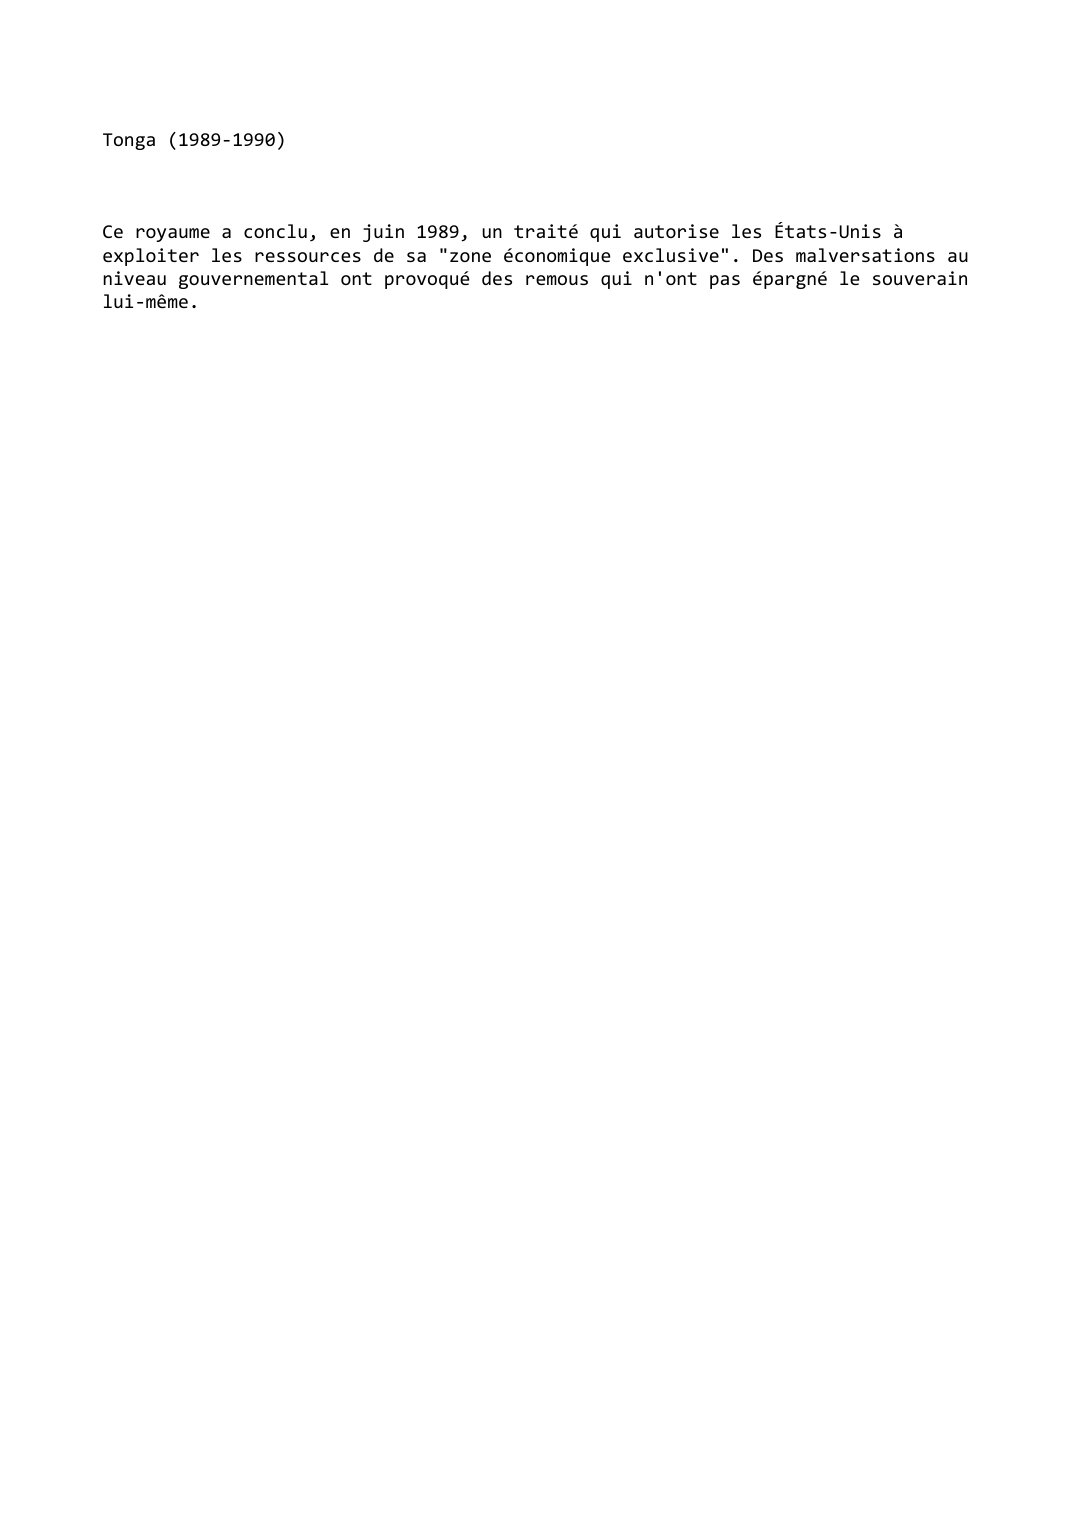 Prévisualisation du document Tonga (1989-1990)